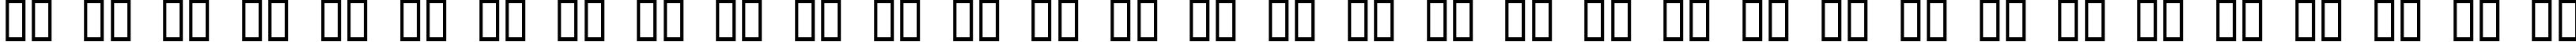 Пример написания русского алфавита шрифтом KR Snowboard